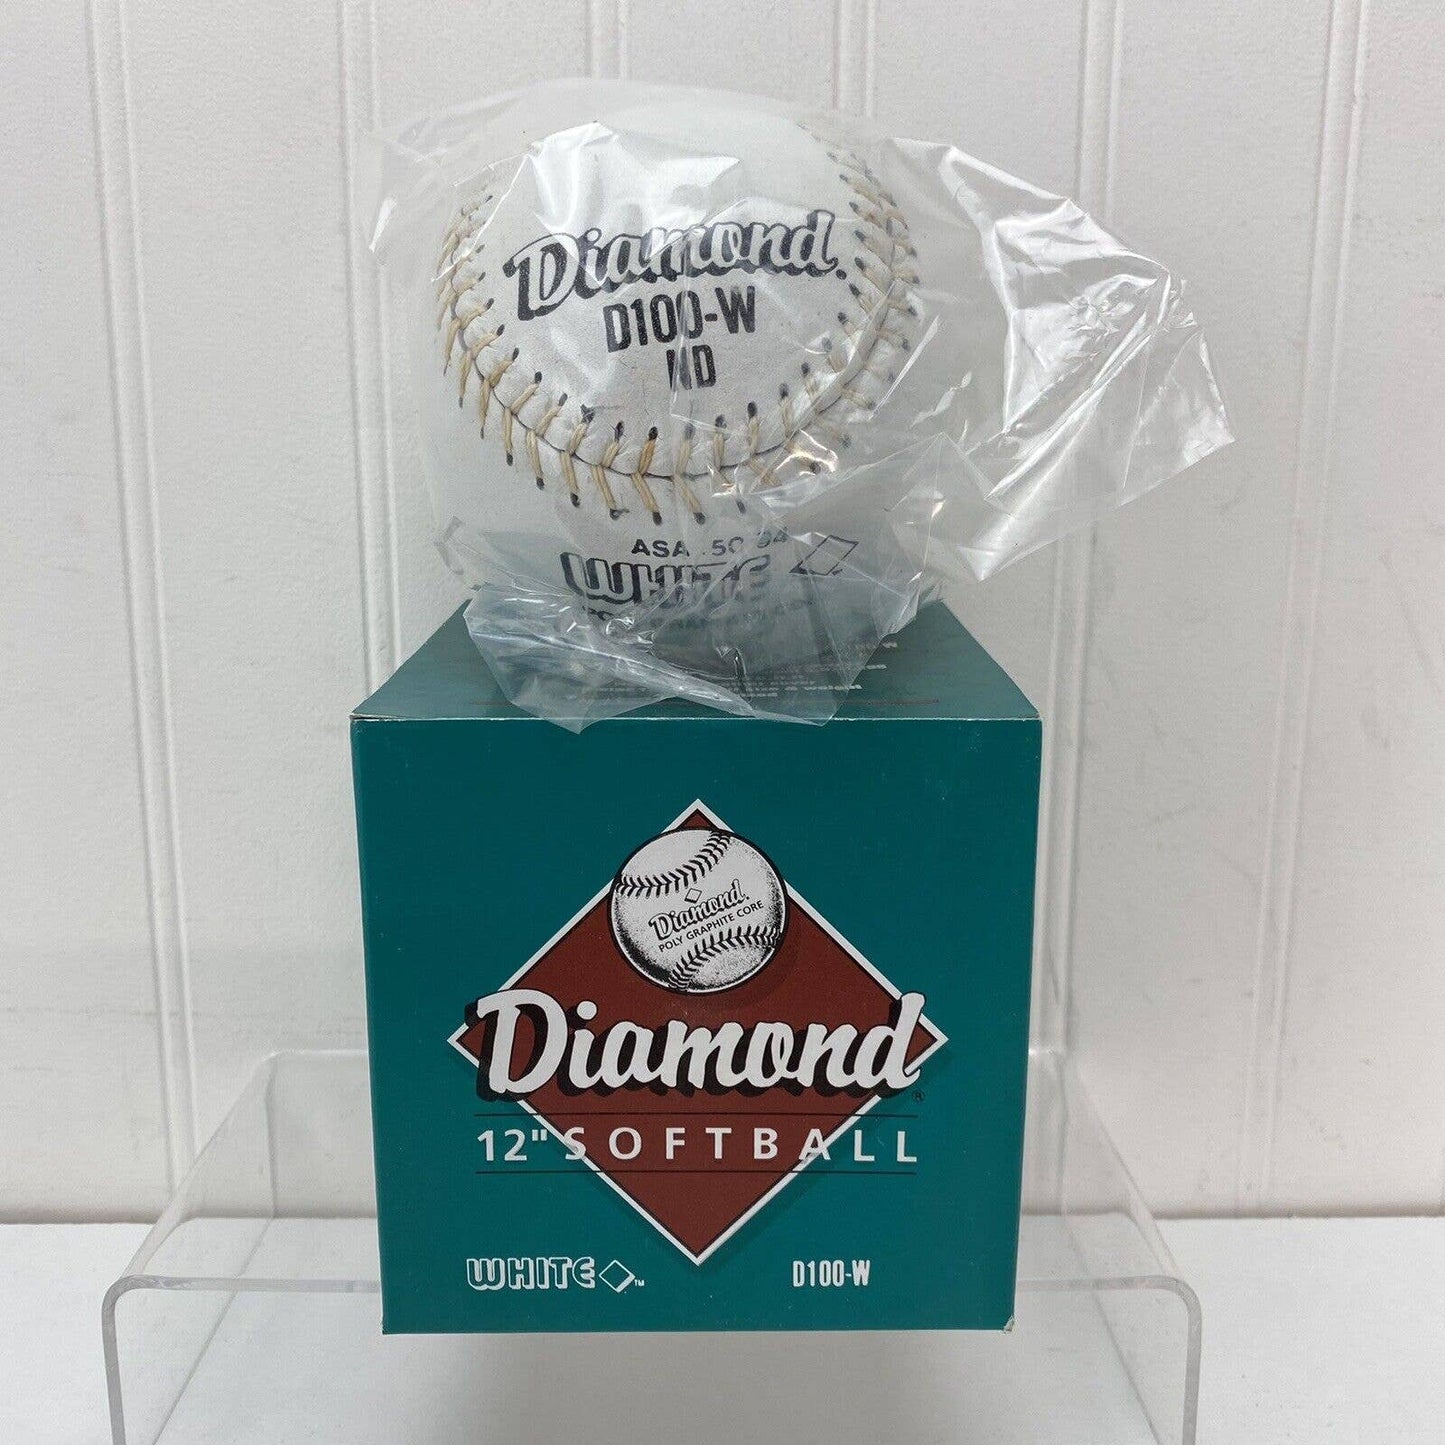 NOS - Vintage Diamond 12" Softball White D100-W Poly Graphite Core ASA .50 COR